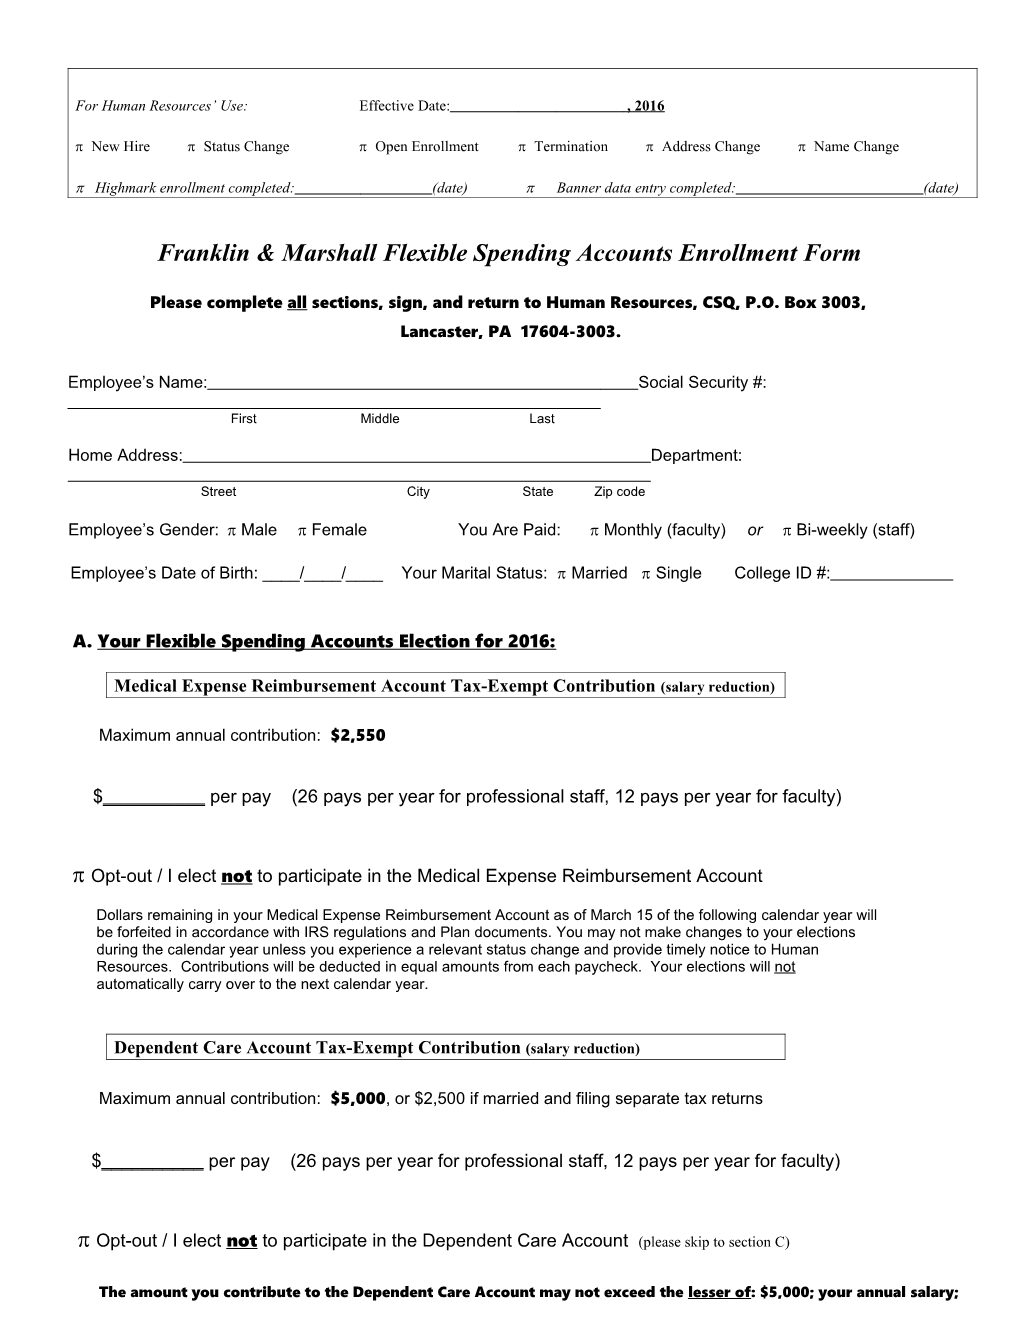 Franklin & Marshall Flexible Spending Accounts Enrollment Form